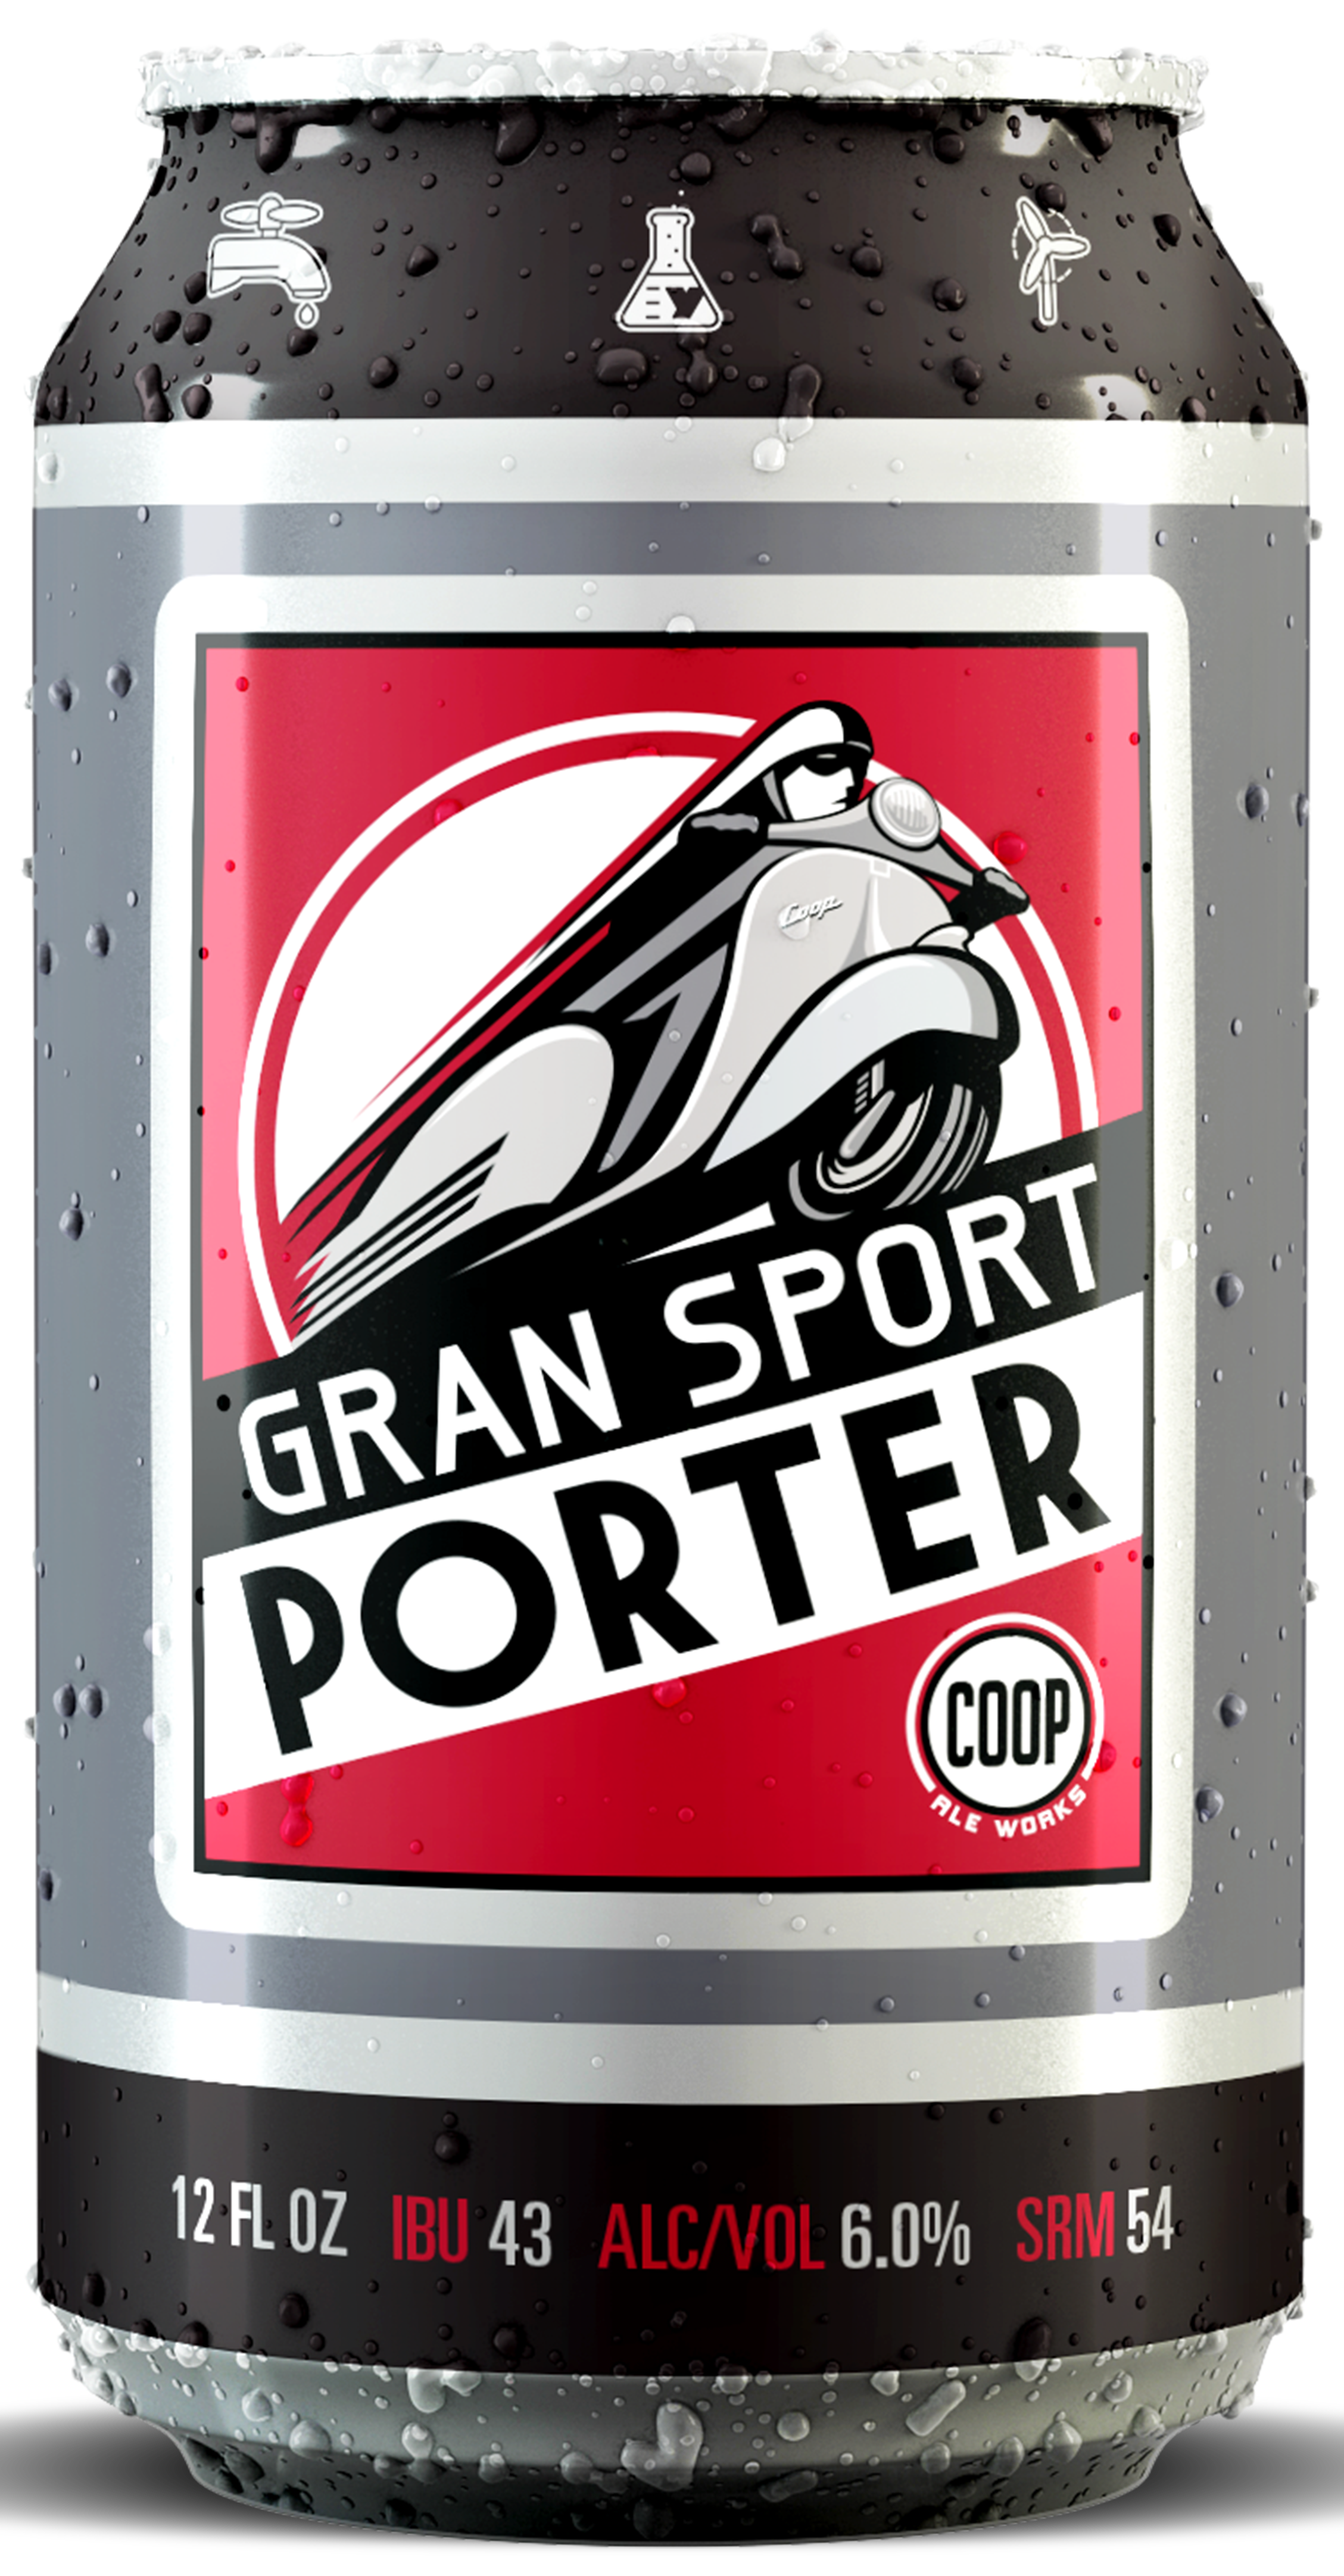 Gran Sport Porter